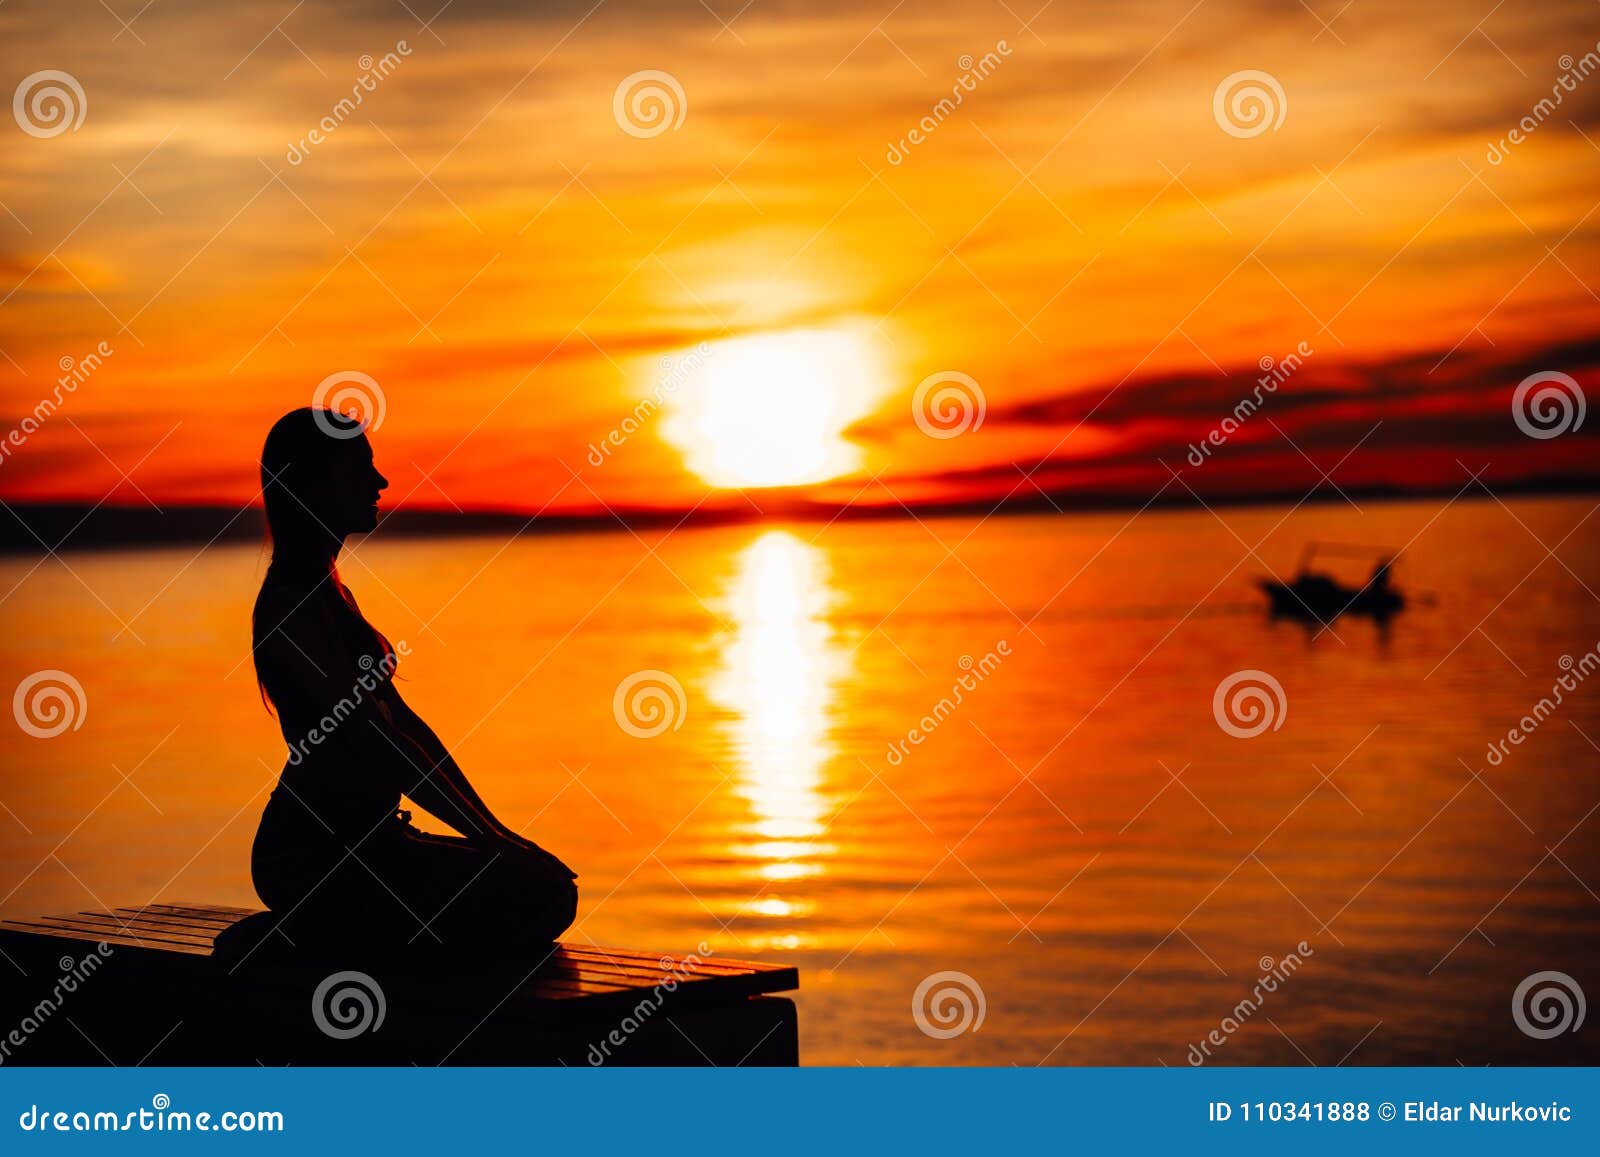 carefree calm woman meditating in nature.finding inner peace.yoga practice.spiritual healing lifestyle.enjoying peace,anti-stress